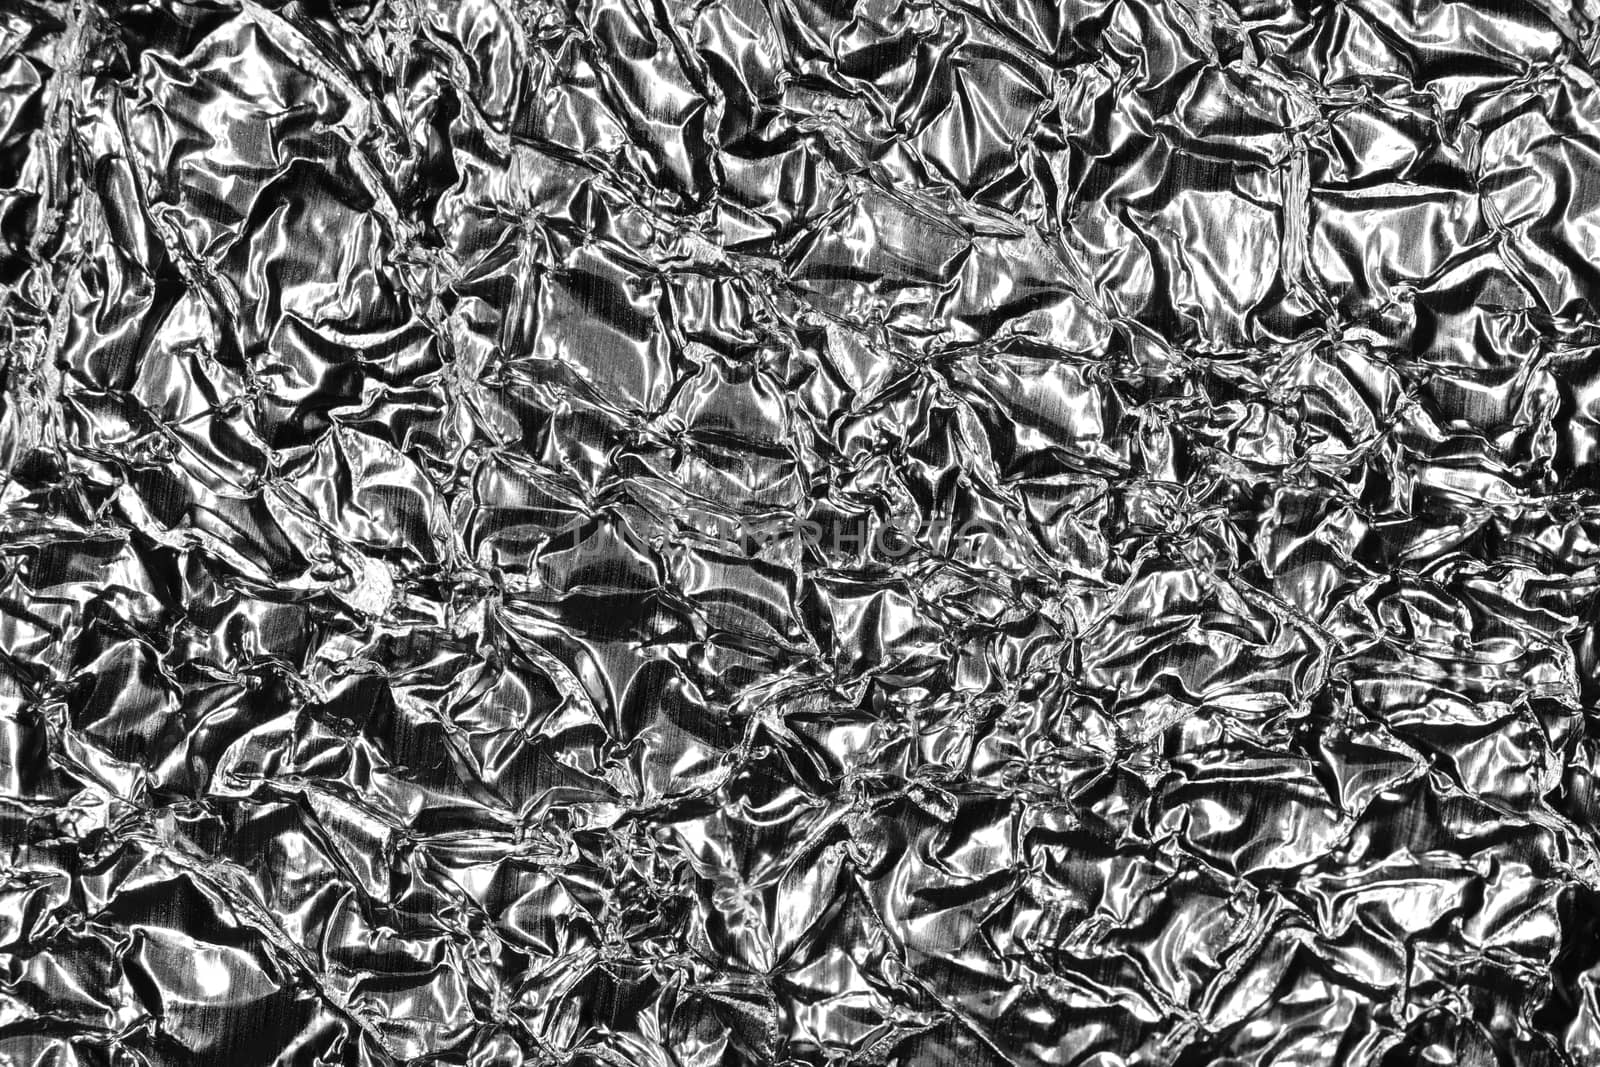 Monochrome Metallic Crumpled Foil Texture. Black & White Background. by sanches812